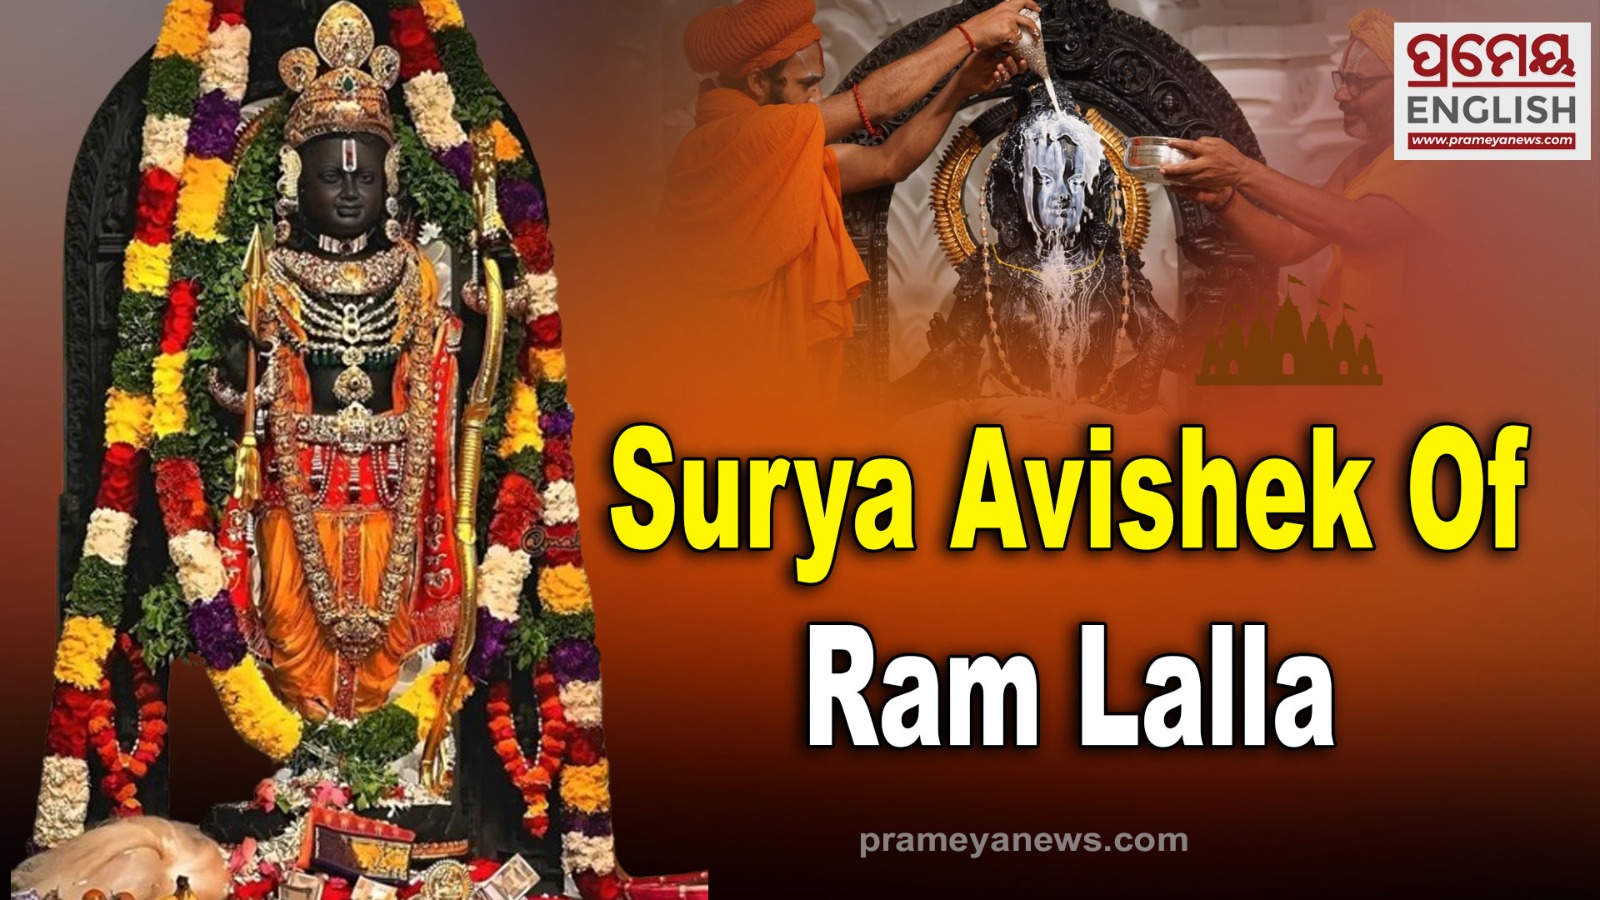 Lord Lingaraj’s Rukuna Rath Yatra held in Bhubaneswar